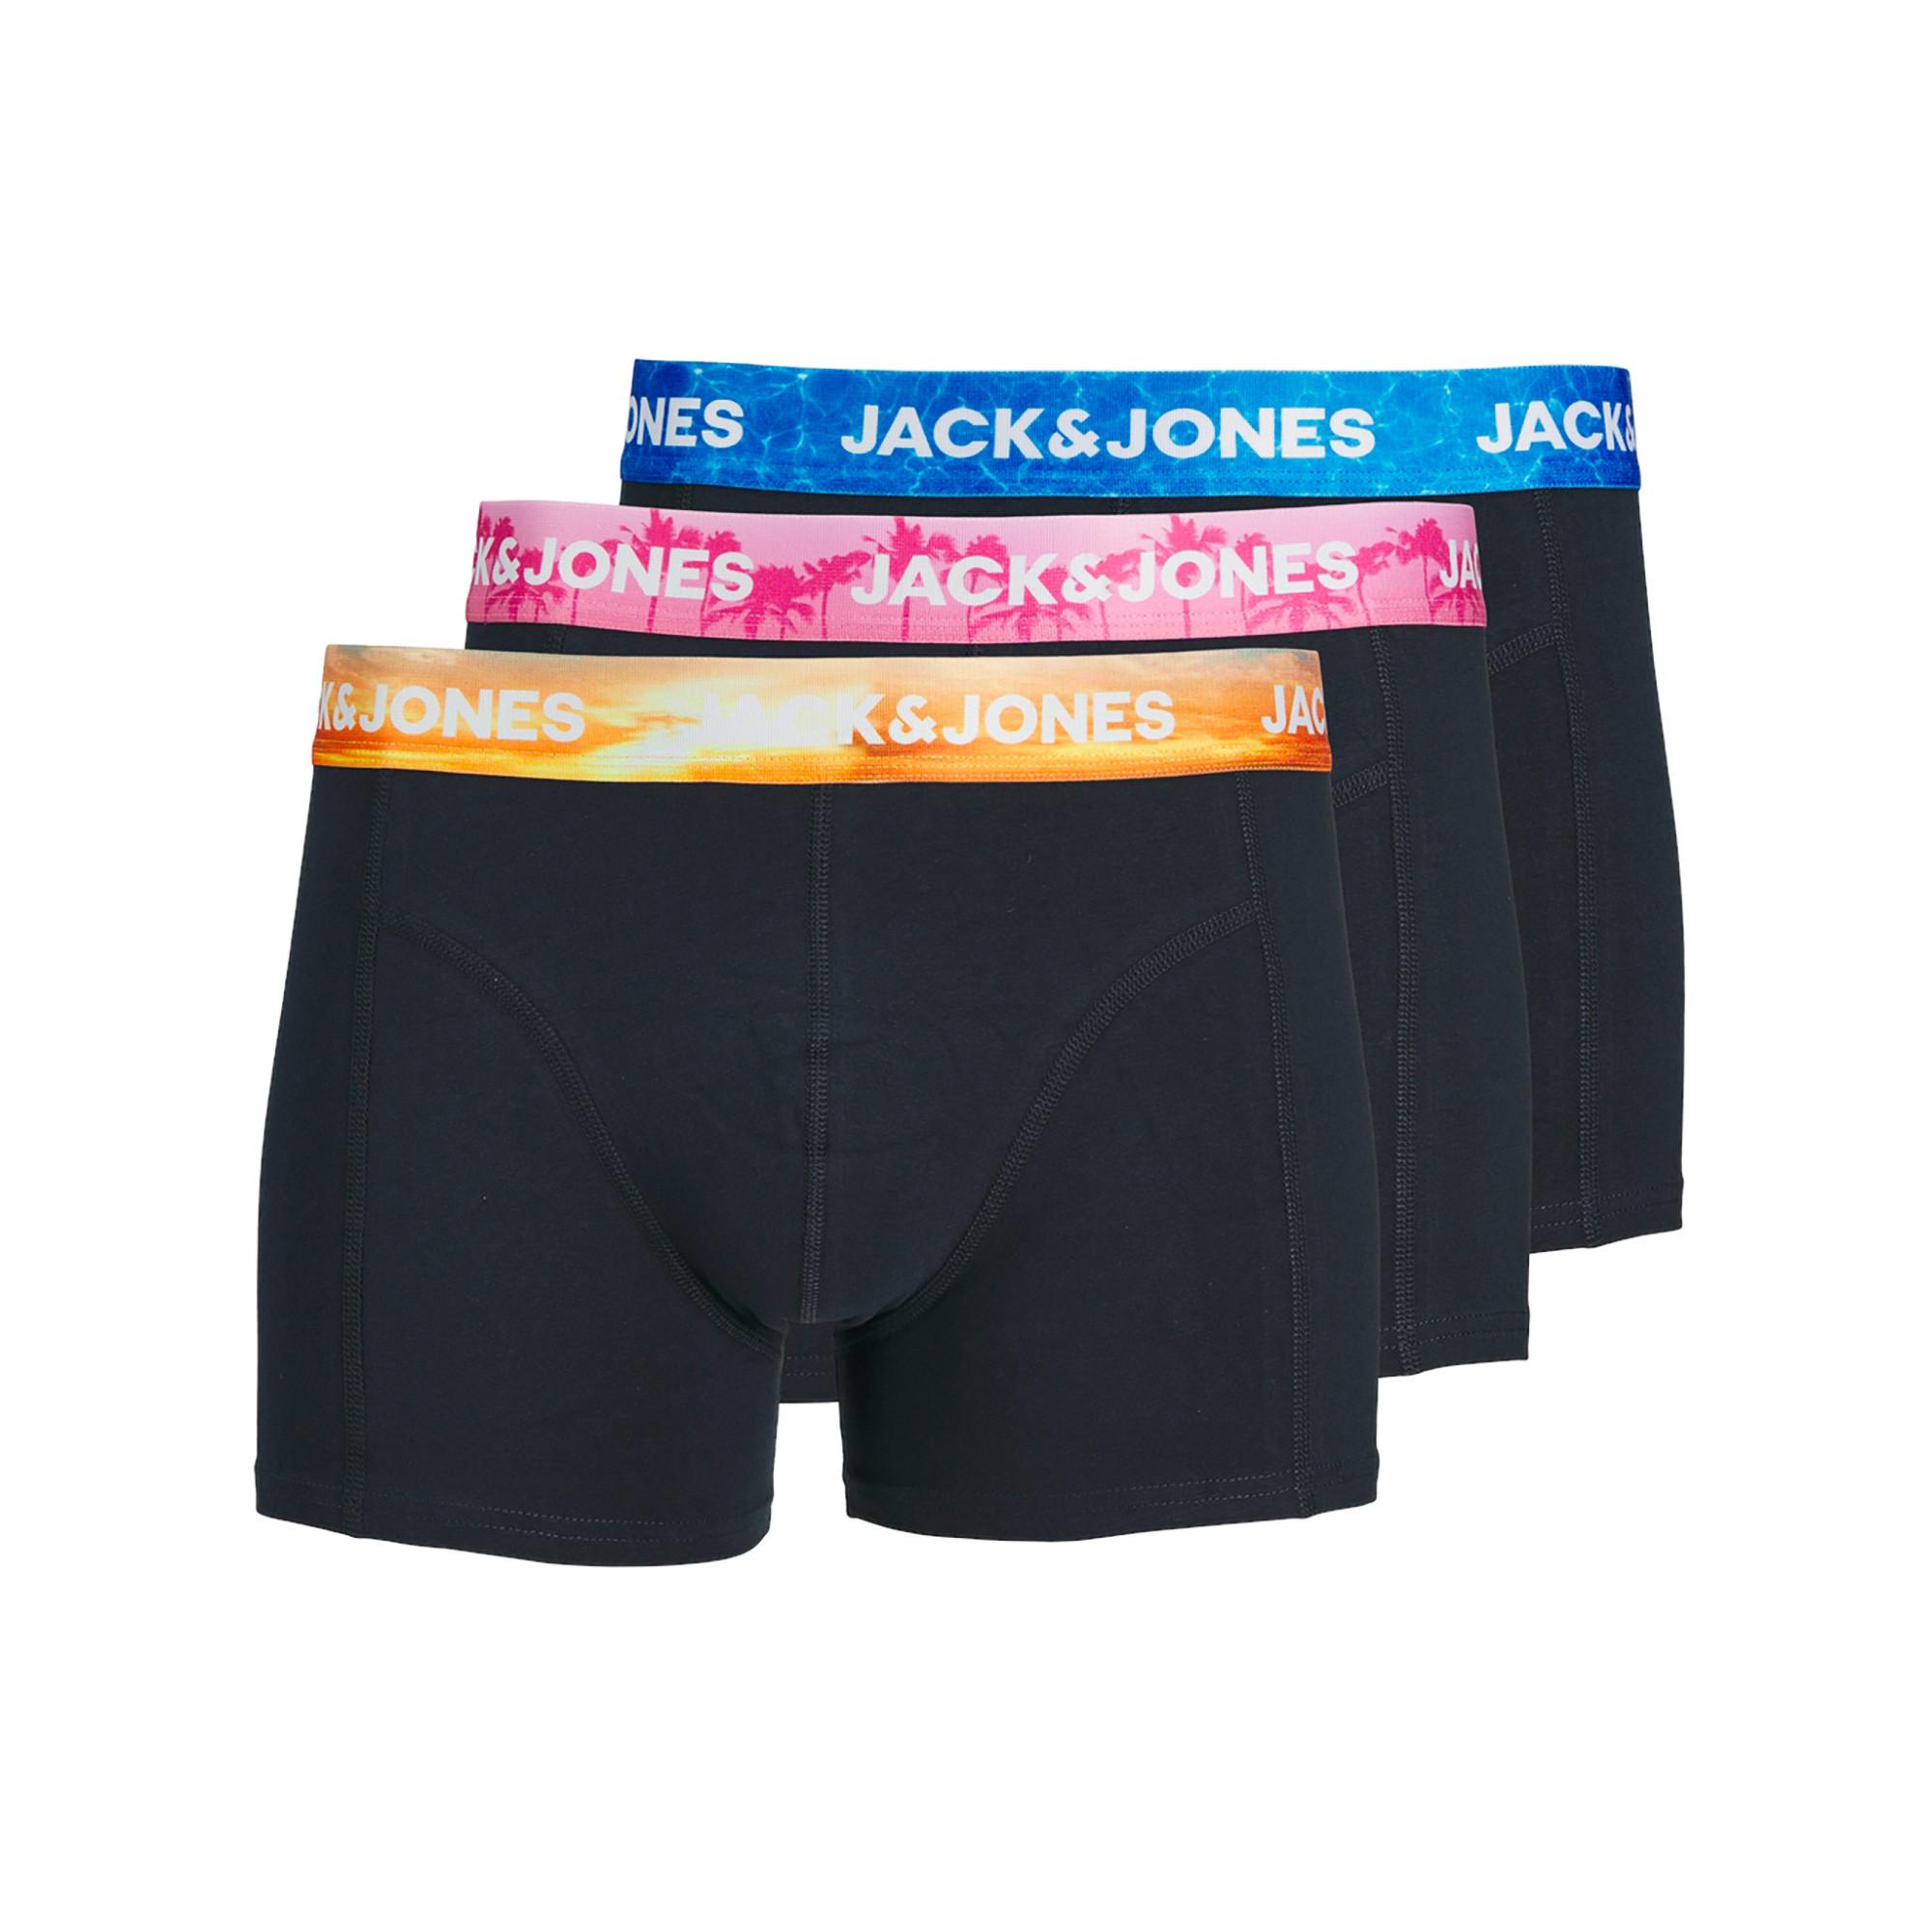 JACK & JONES JACLUCA SOLID TRUNKS 3 P Lot de 3 boxers 